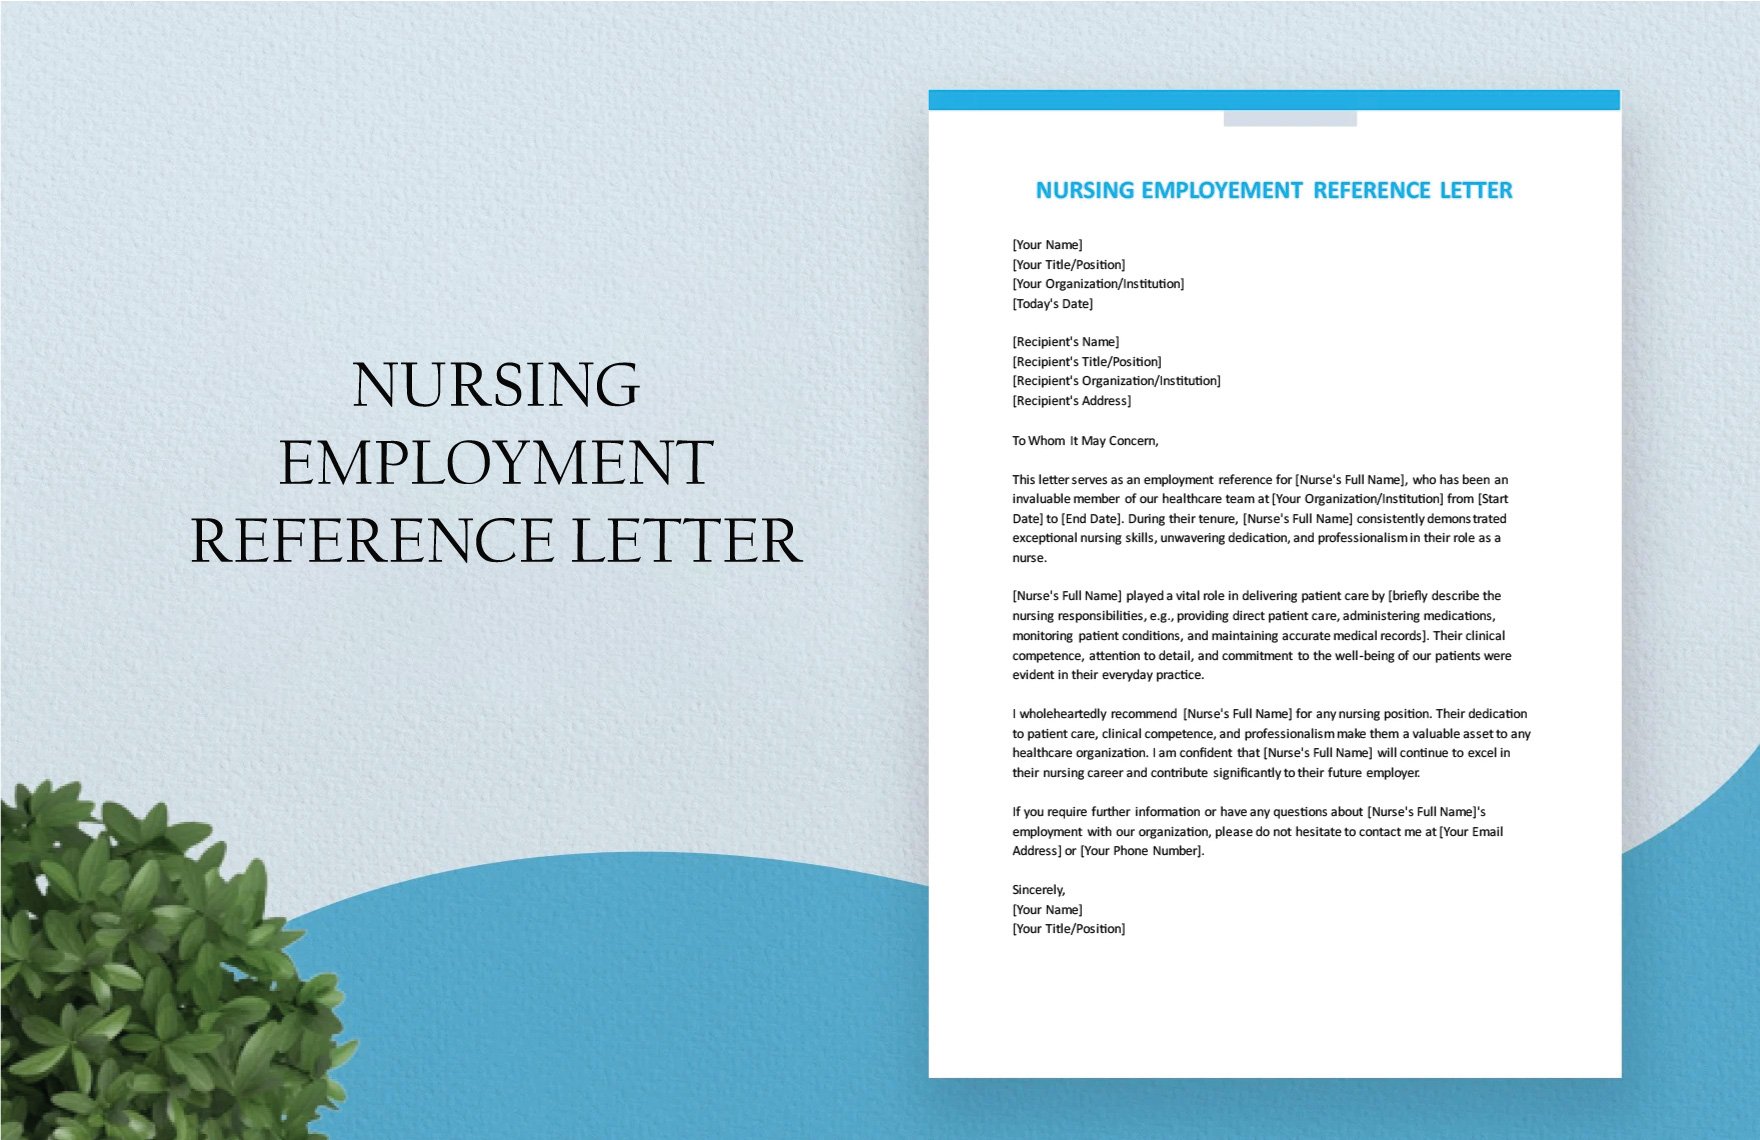 Nursing Employment Reference Letter in Word, Google Docs, PDF